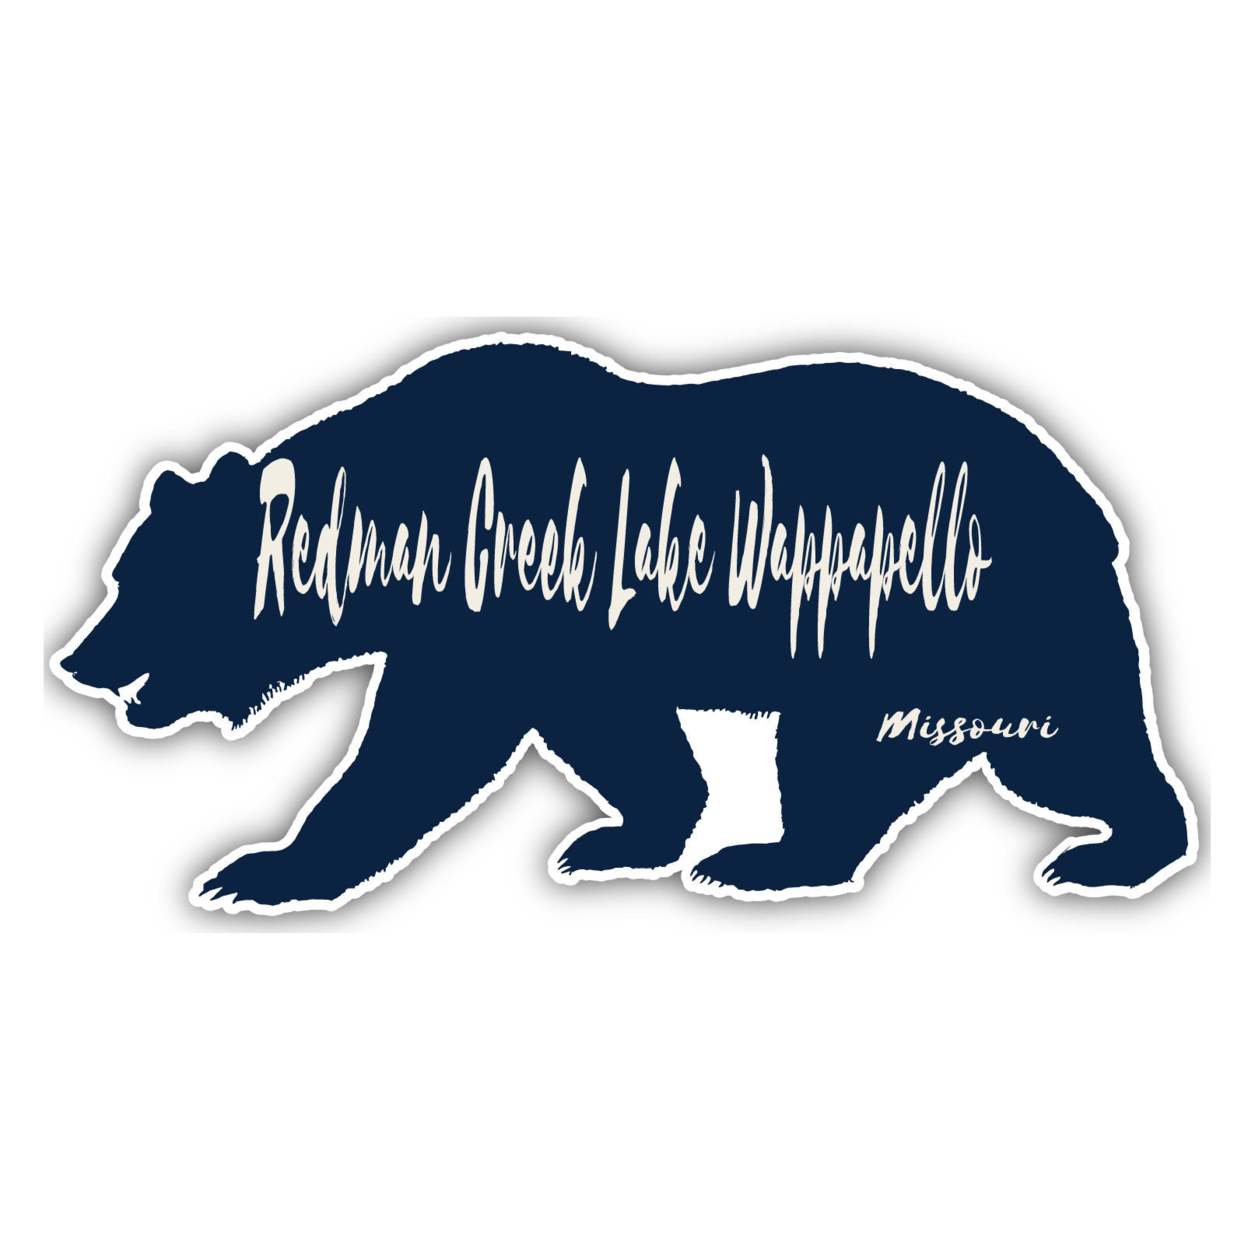 Redman Creek Lake Wappapello Missouri Souvenir Decorative Stickers (Choose Theme And Size) - Single Unit, 2-Inch, Bear